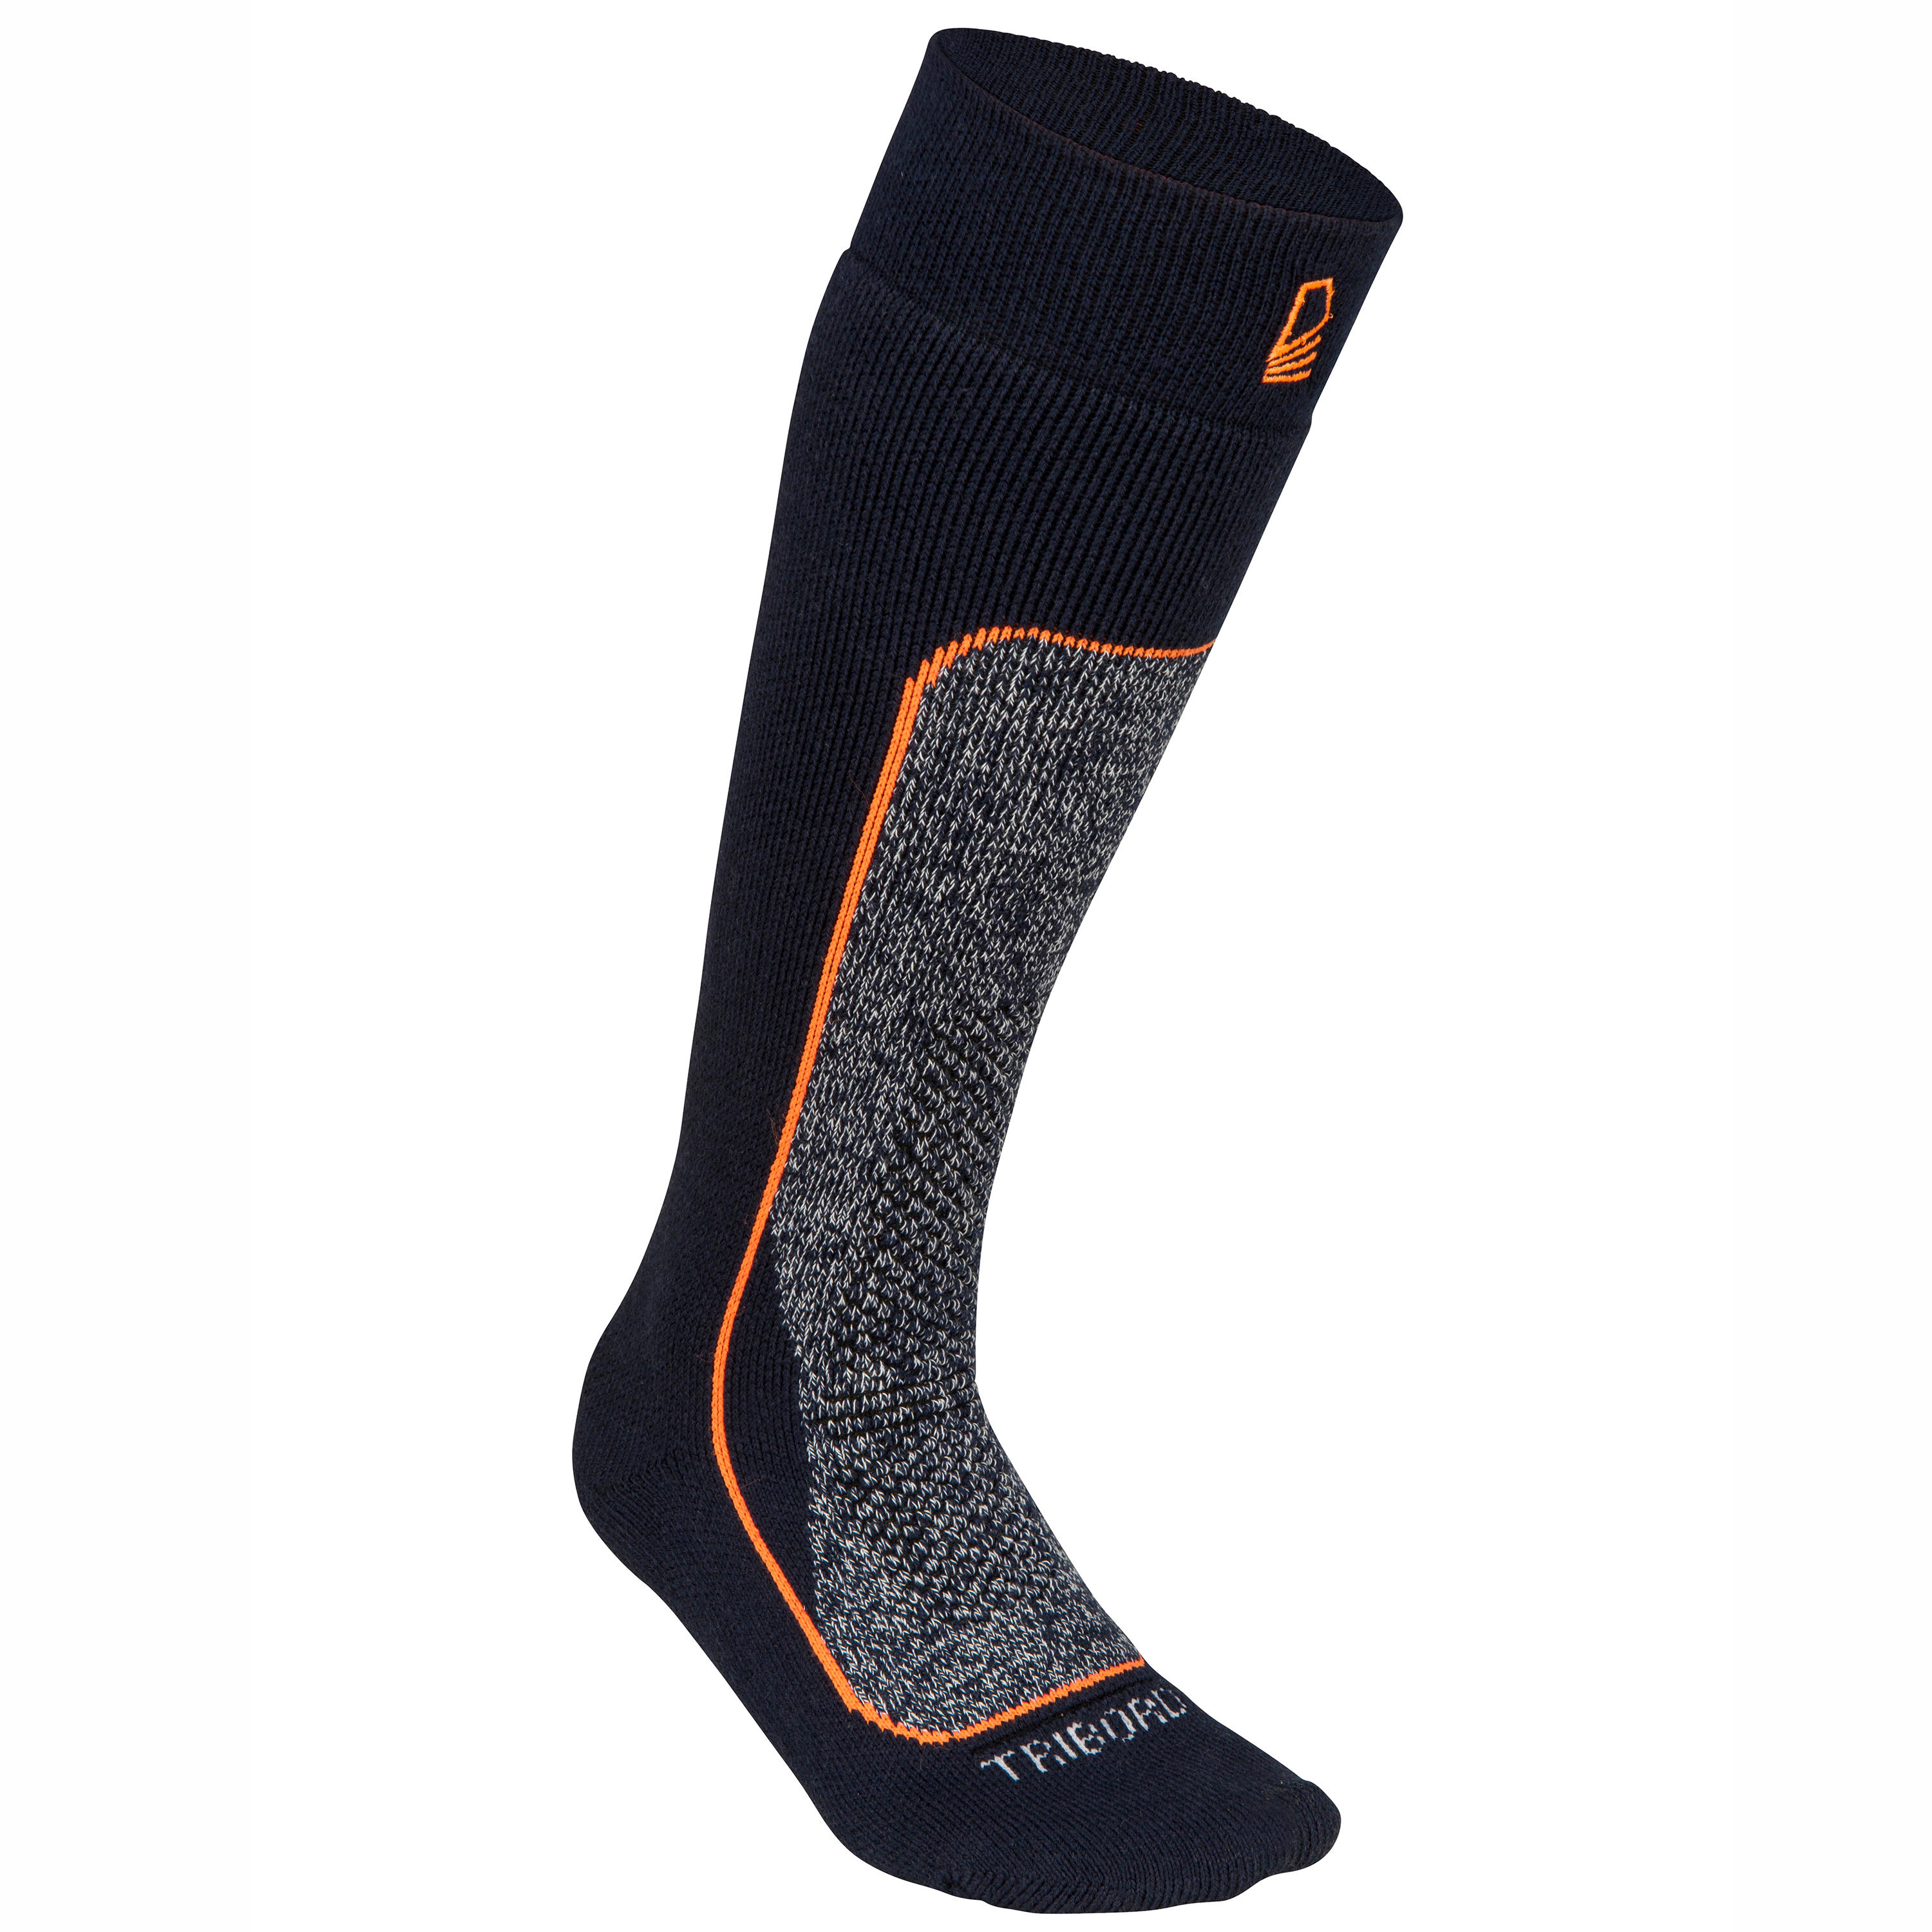 Adults’ Warm Sailing trouser socks 500 1/4